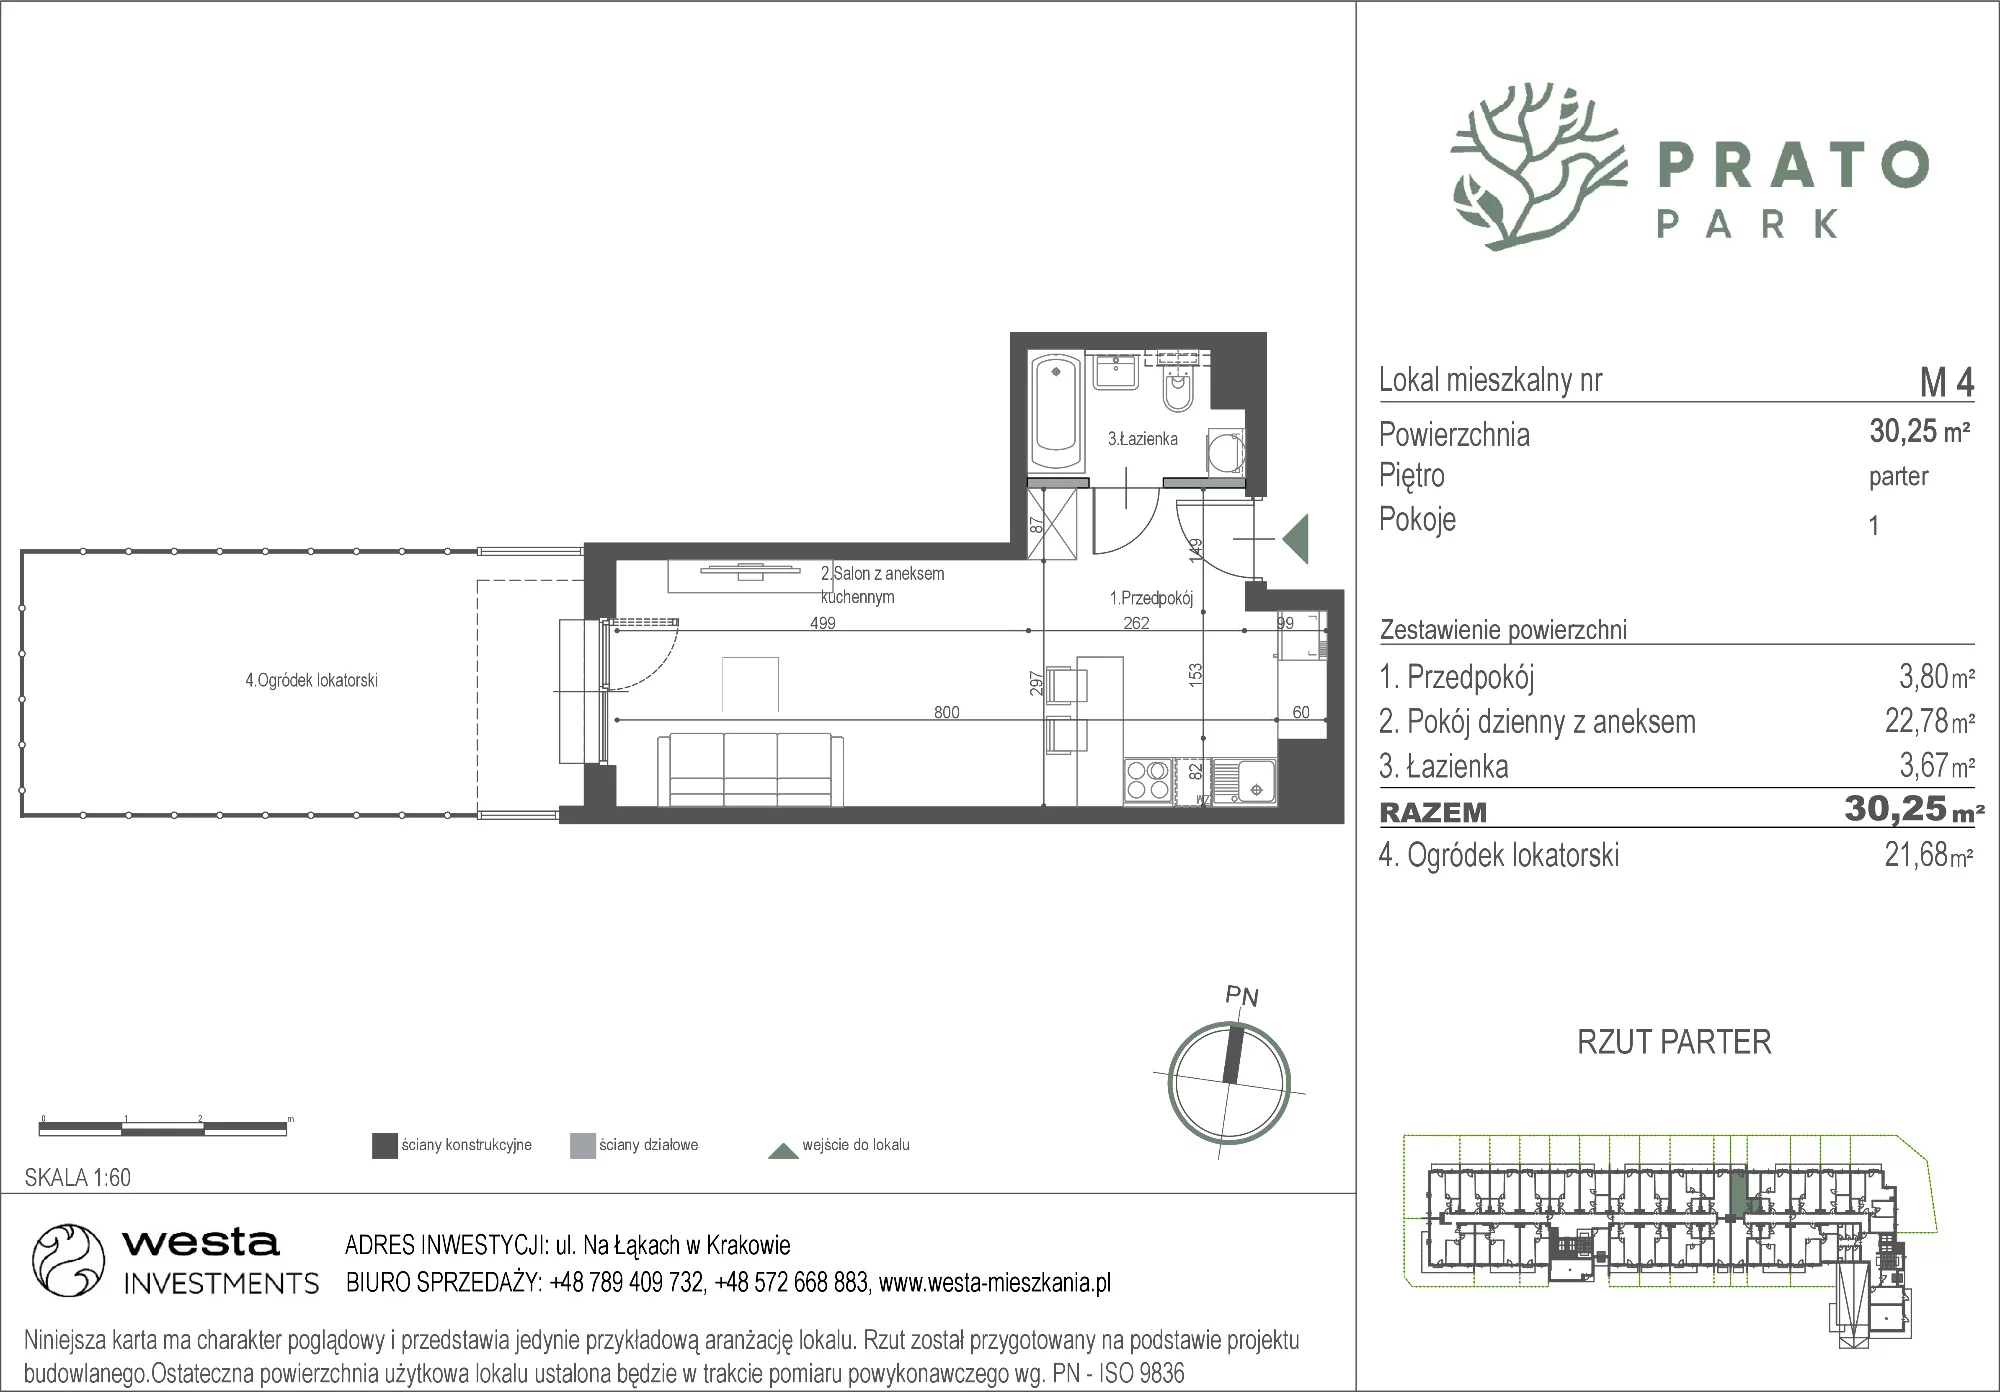 Mieszkanie 30,25 m², parter, oferta nr M4, Prato Park, Kraków, Czyżyny, ul. Na Łąkach